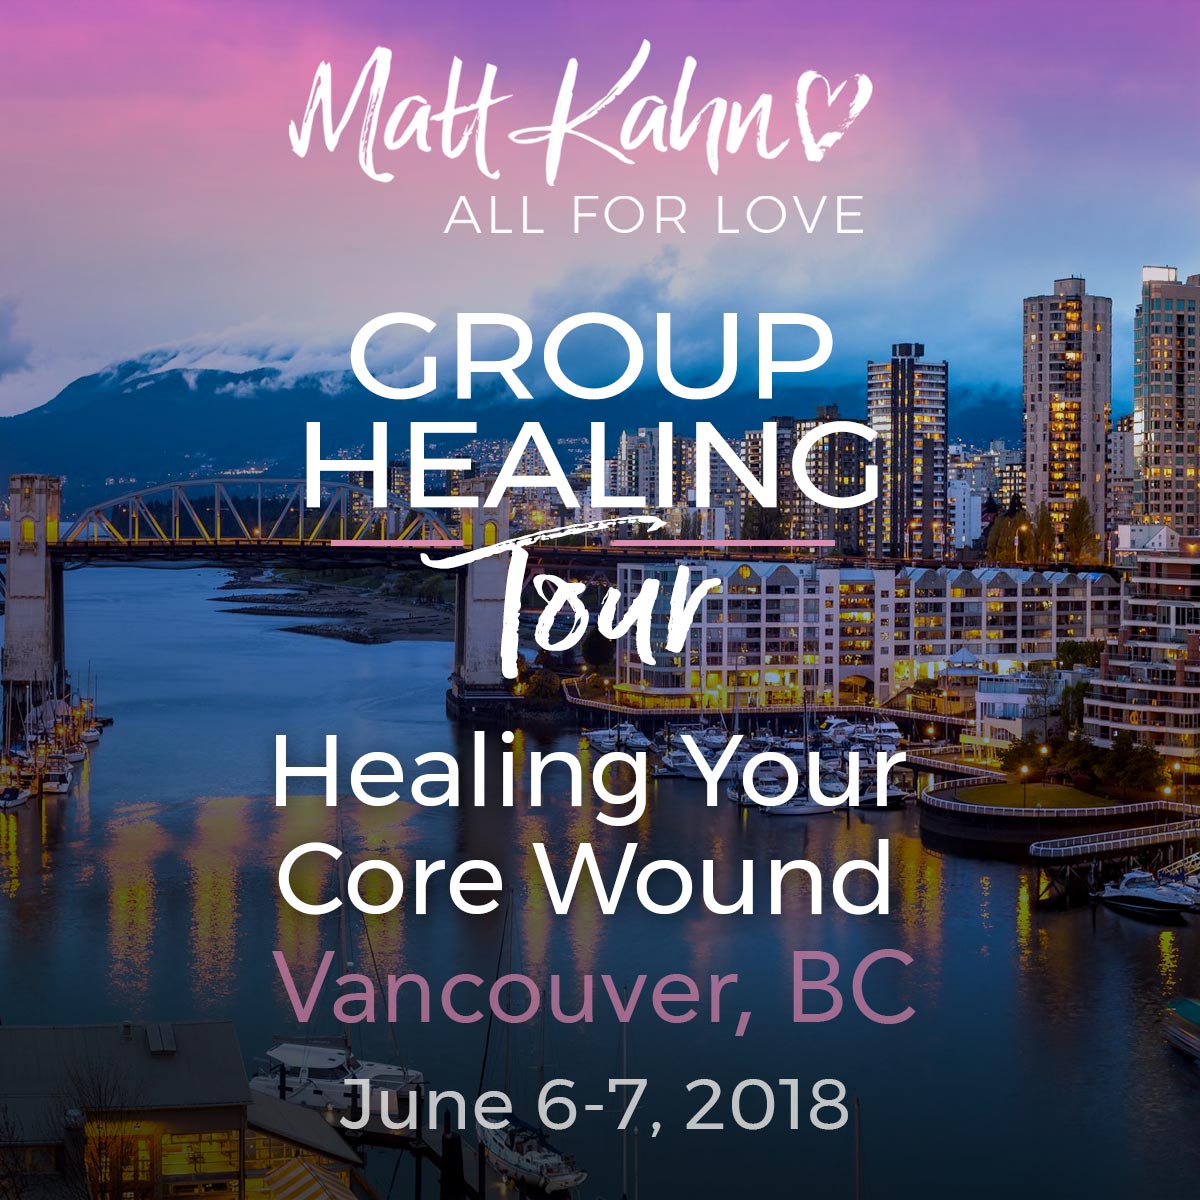 Group Healing Tour Vancouver British Columbia